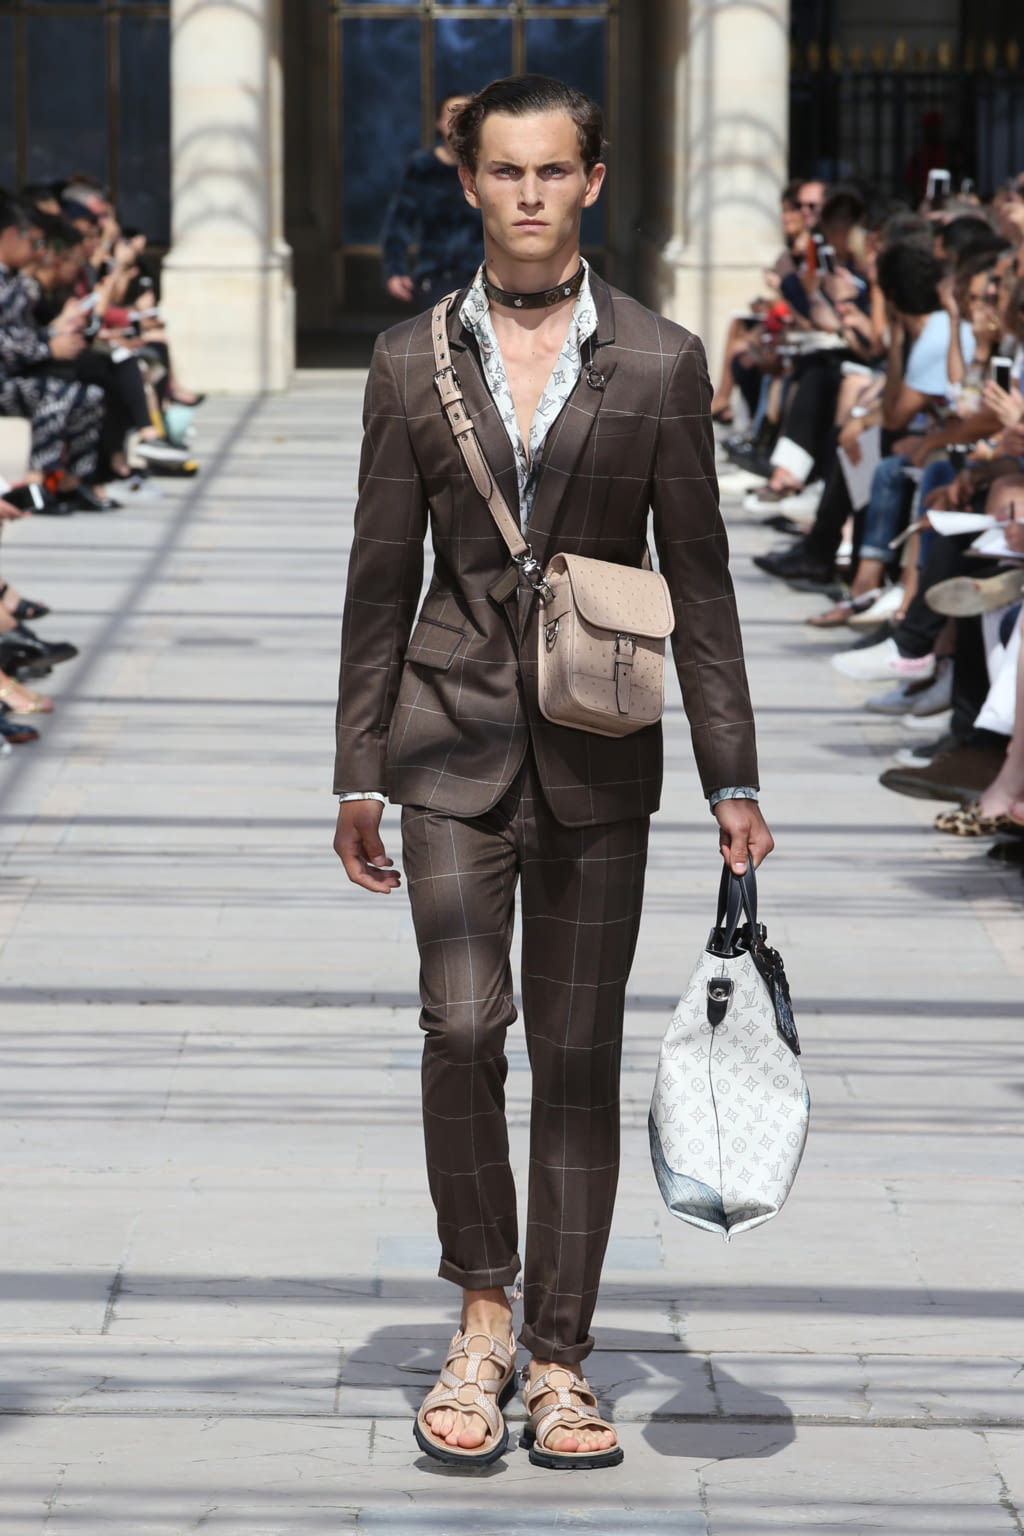 Christian Louboutin Spring 2017 Collection: Milan Men's Fashion